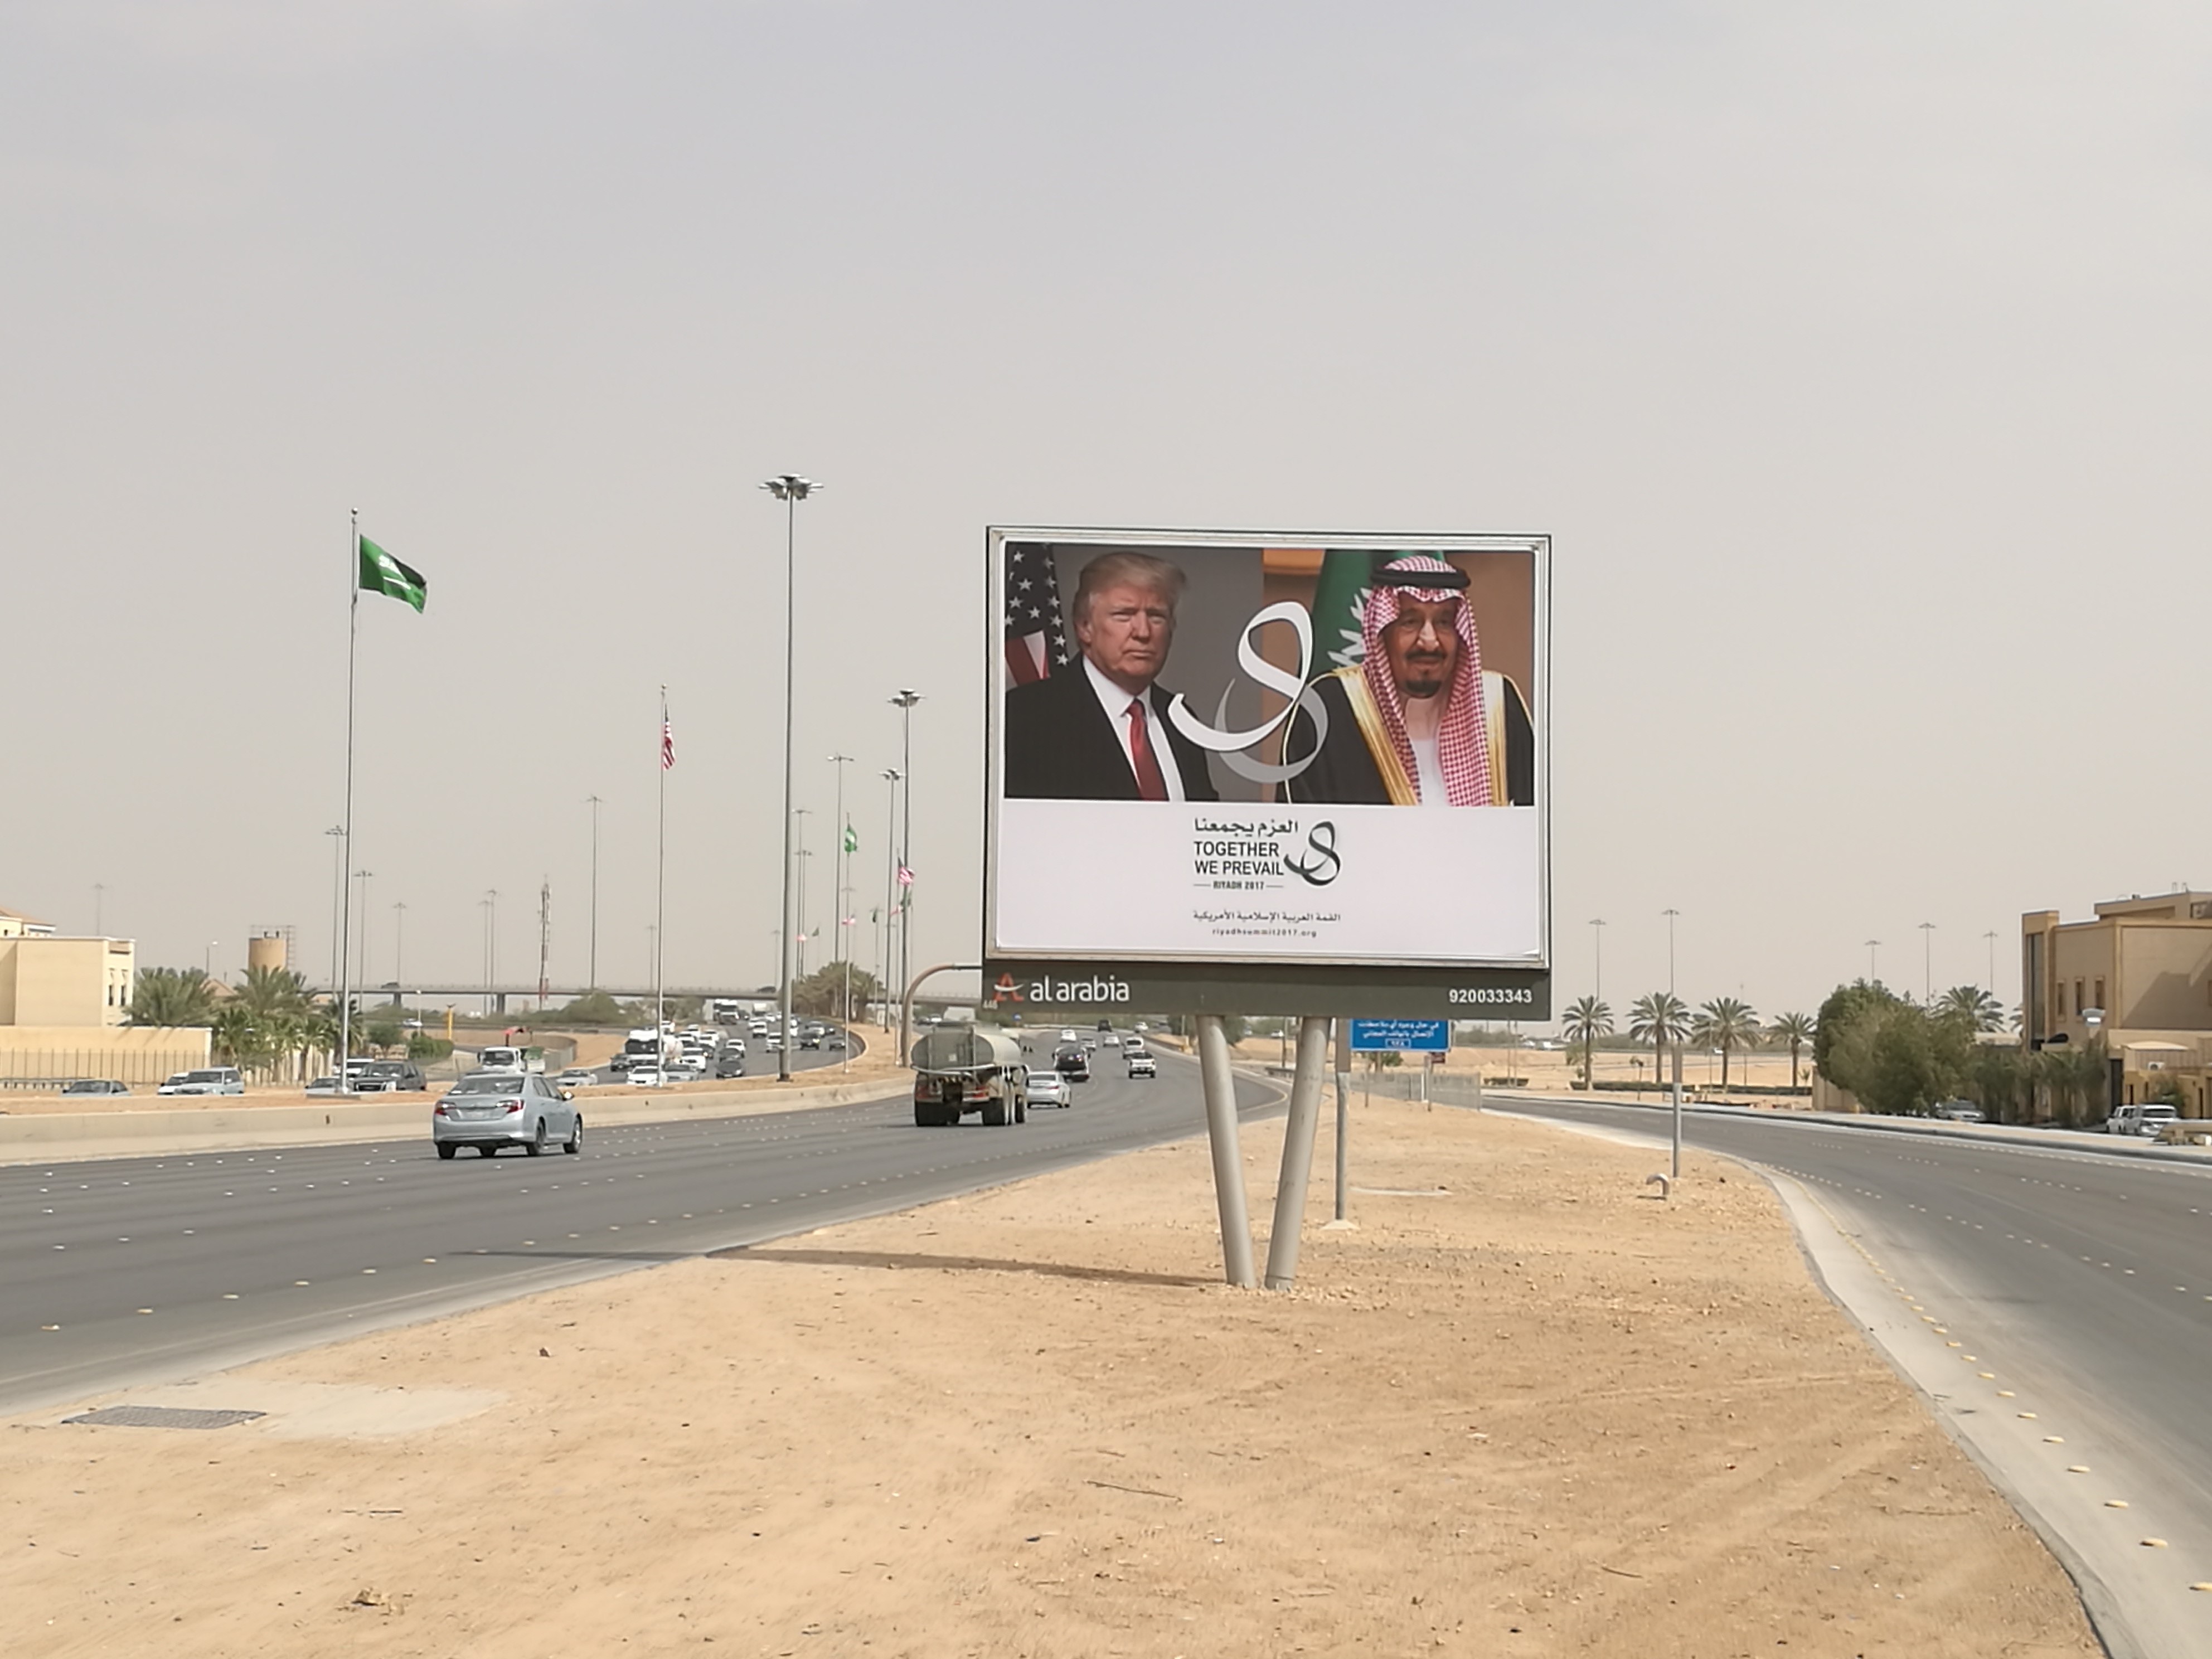 Images of President Donald Trump are displayed on billboards, ahead of Trump's visit to Saudi Arabia, in Riyadh, Saudi Arabia on May 18, 2017. (Ahmed Youssef Elsayed Abdelrehim—Anadolu Agency/Getty Images)